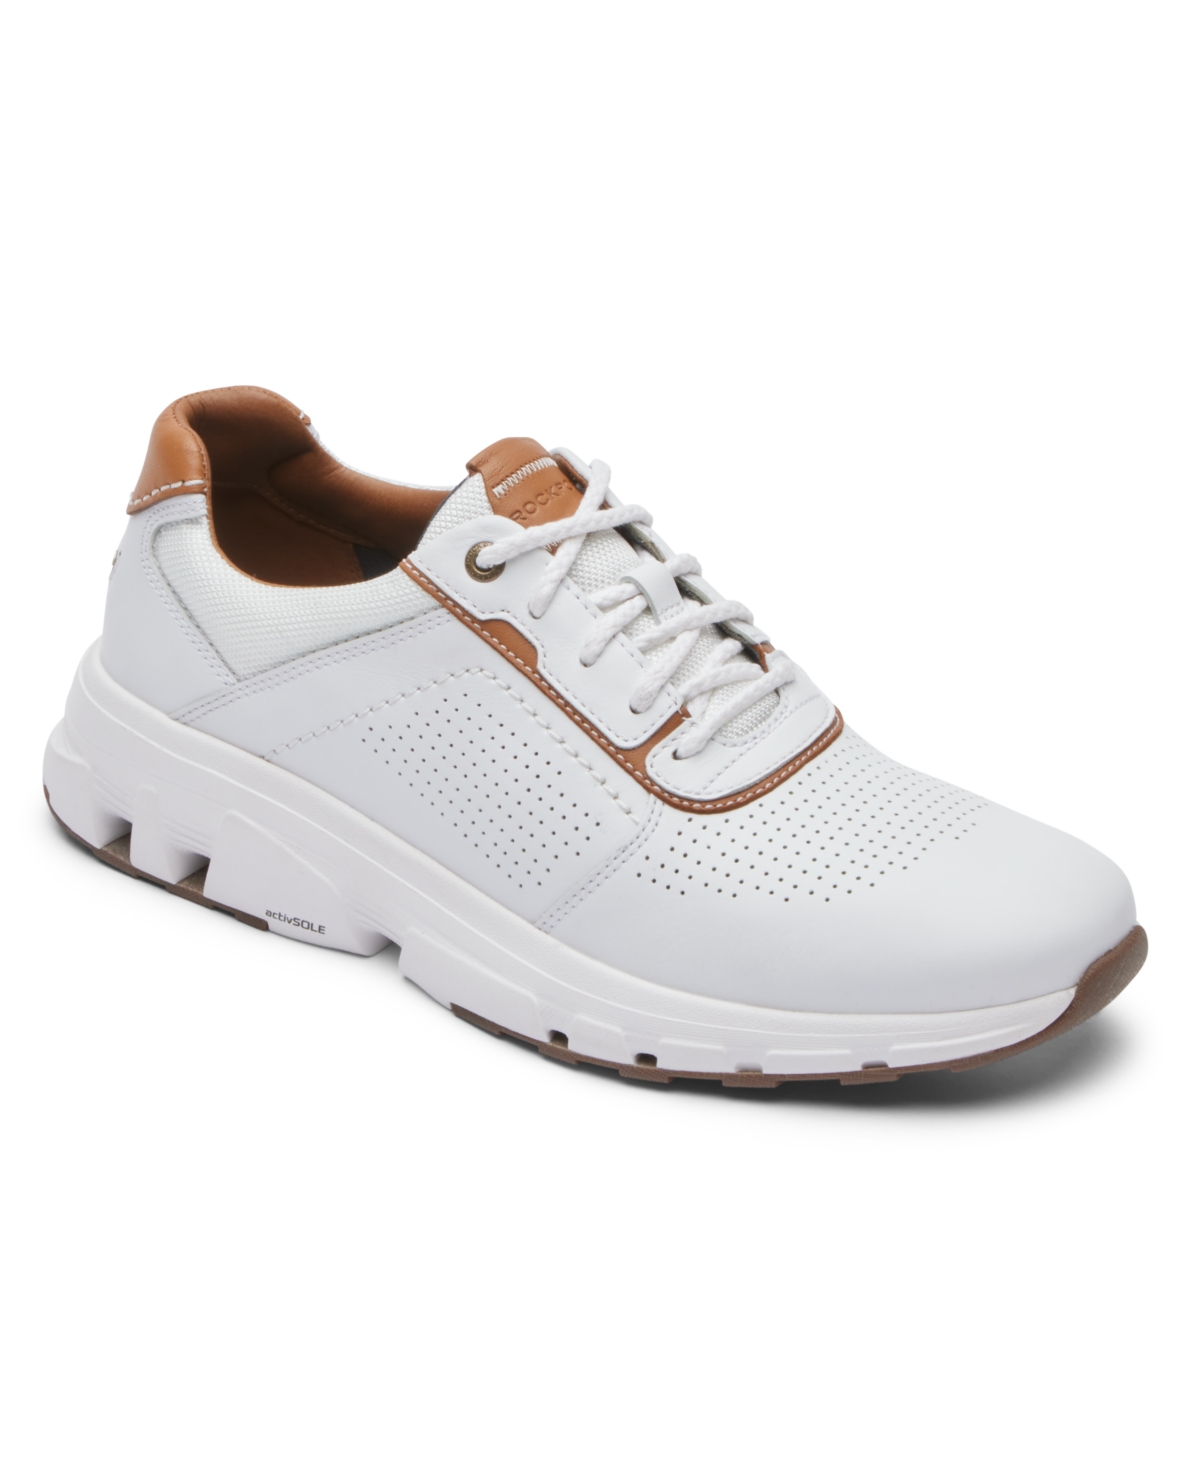 Men's ReboundX Plain Toe Sneaker - WHITE/TAN